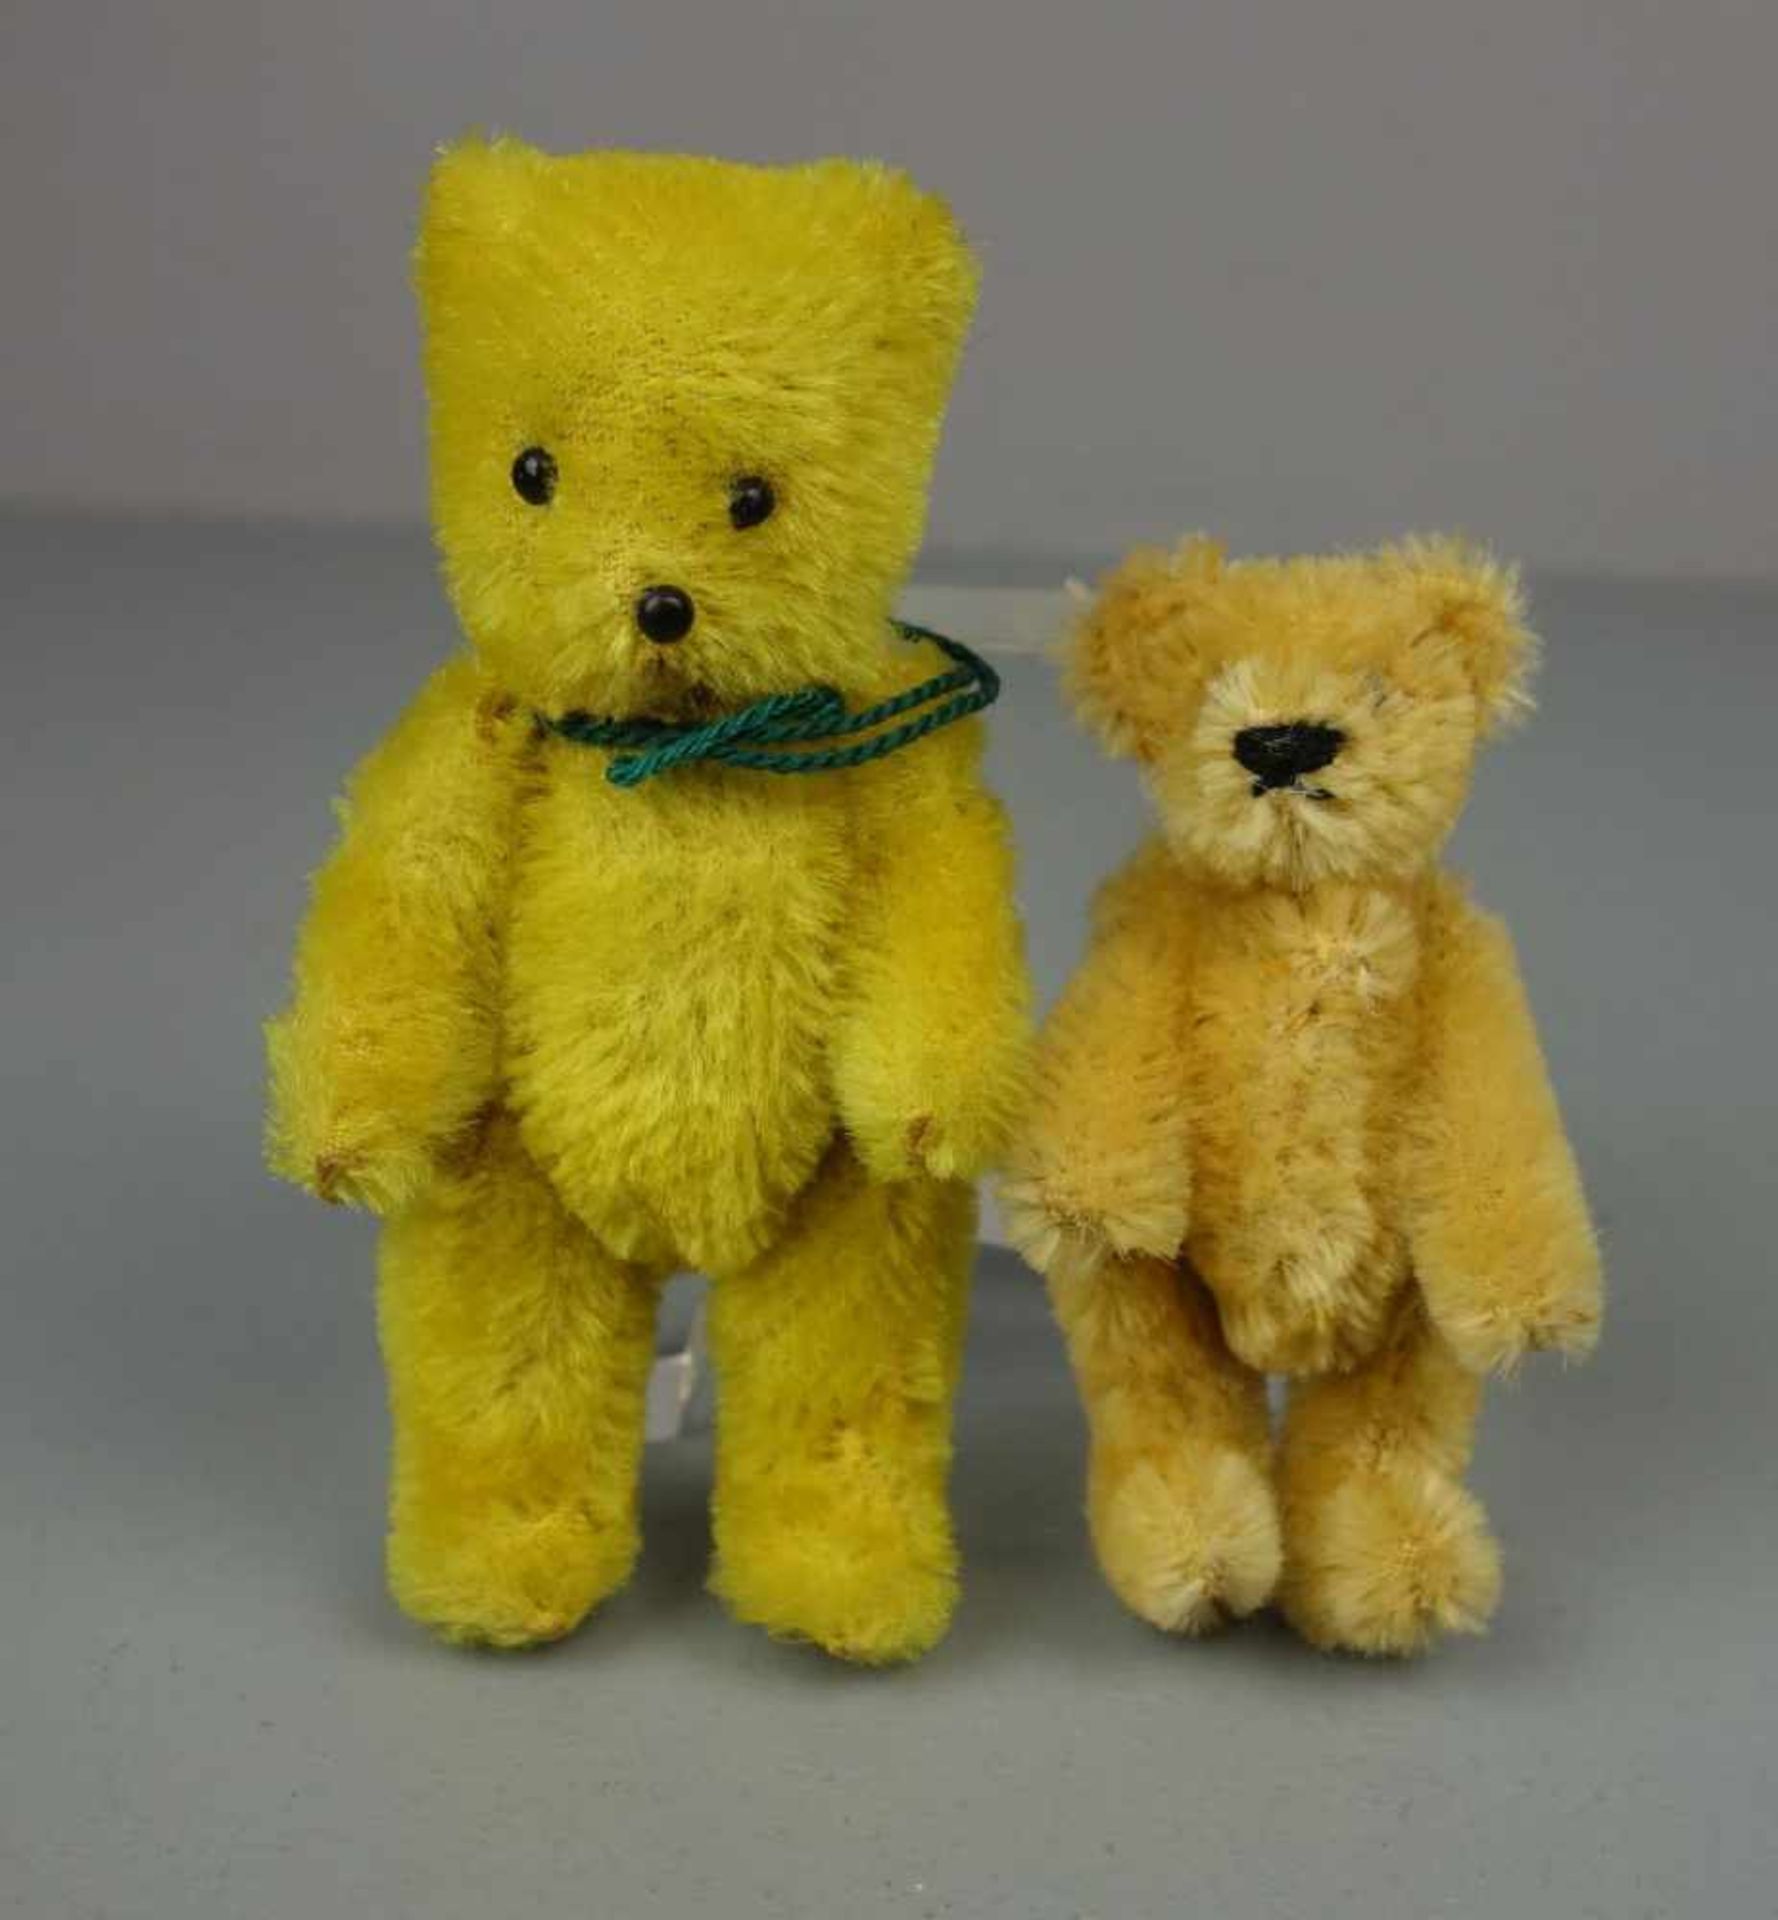 PLÜSCHTIERE / TEDDYBÄREN: Konvolut Miniatur Teddys / Bären - 6 Stück / six teddy bears, 20. Jh., - Bild 7 aus 8